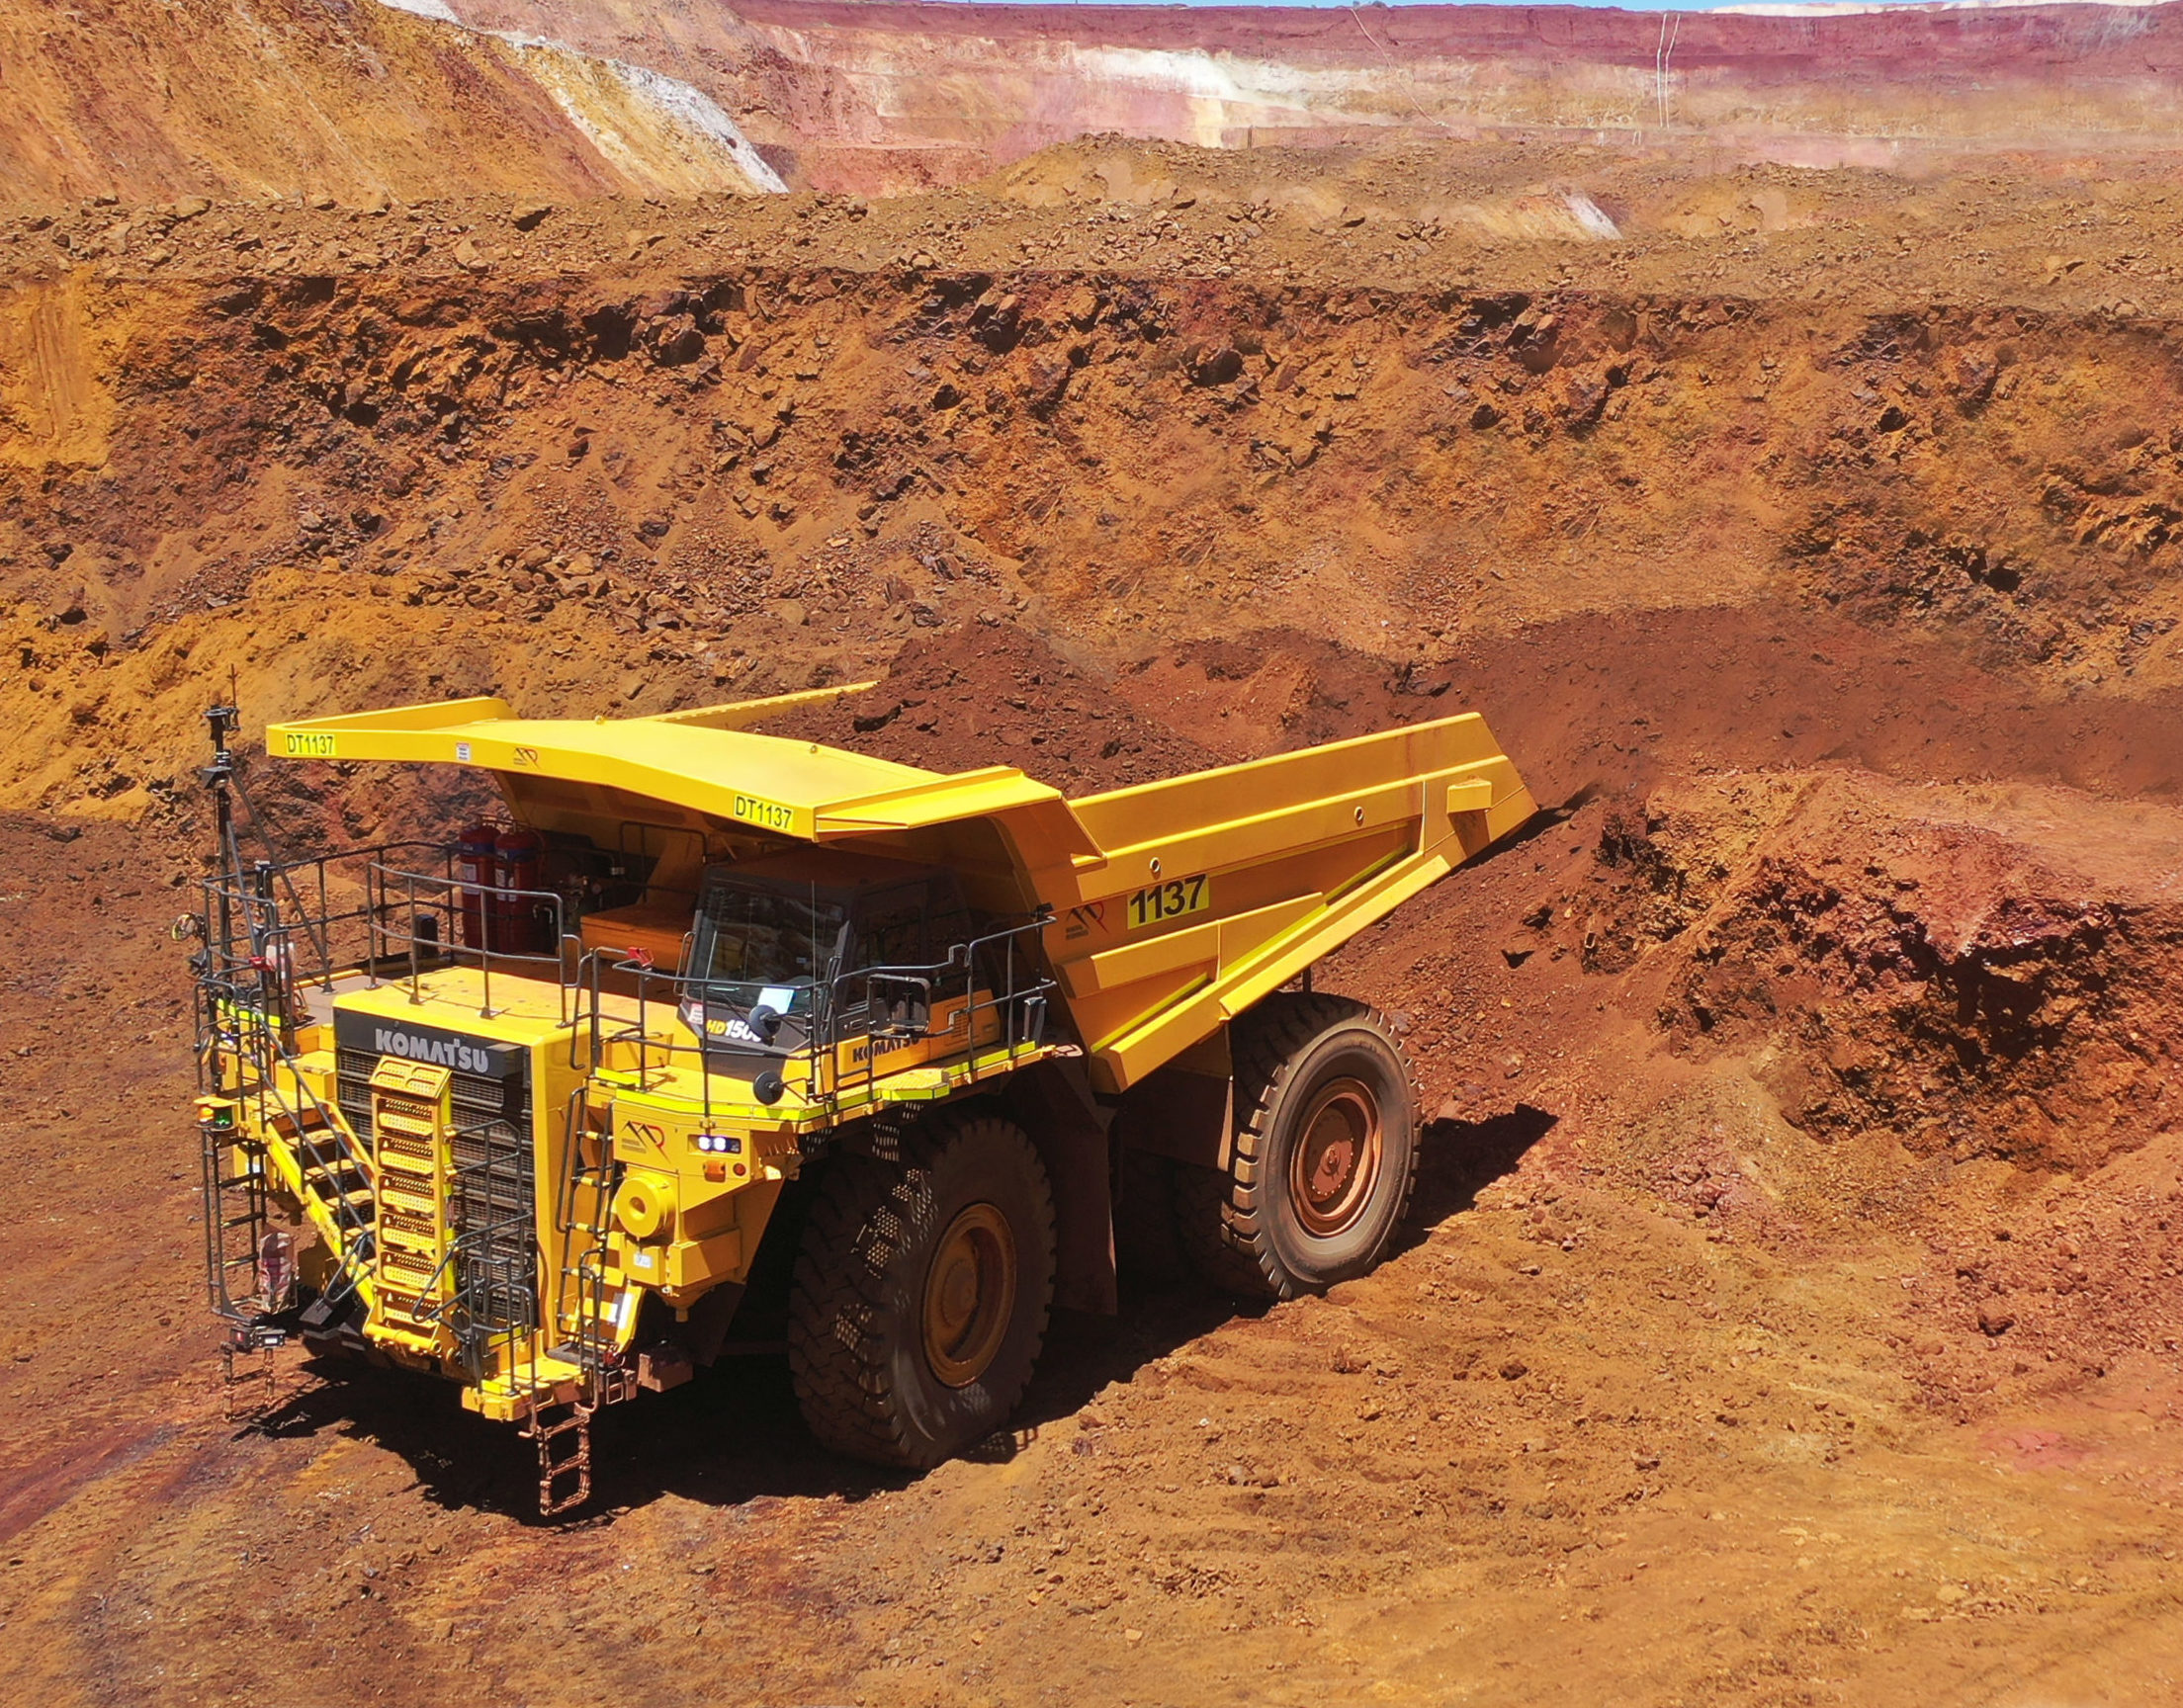 Komatsu HD1500-8 haul trucks reach new heights for MinRes' Iron Valley mine  - International Mining